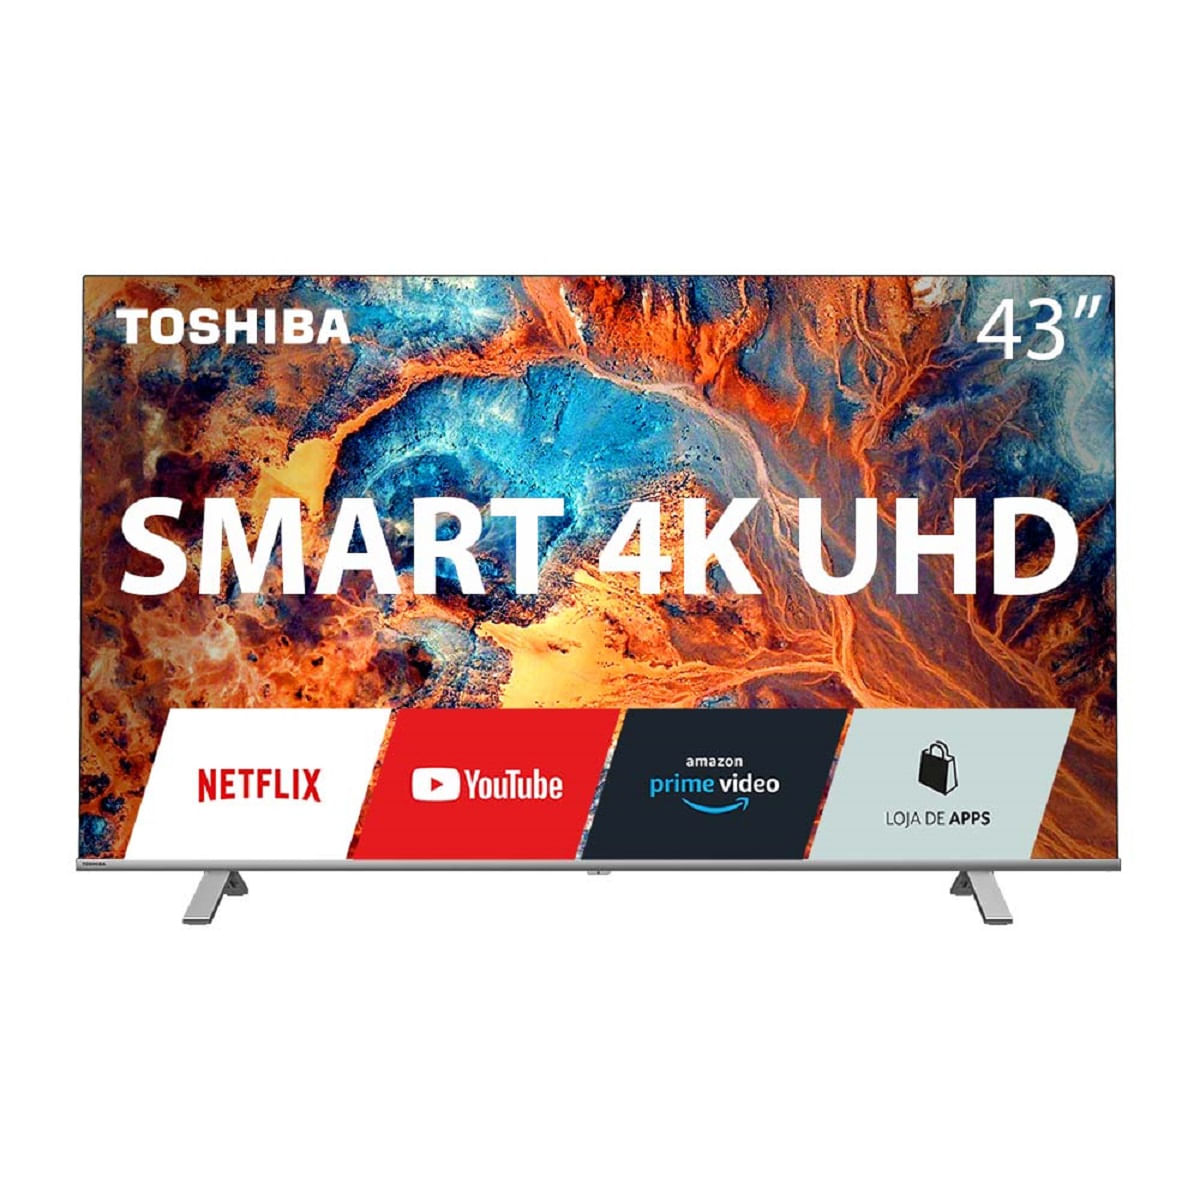 Smart Tv Dled Toshiba 43" 4K Tb003 Smart Vida